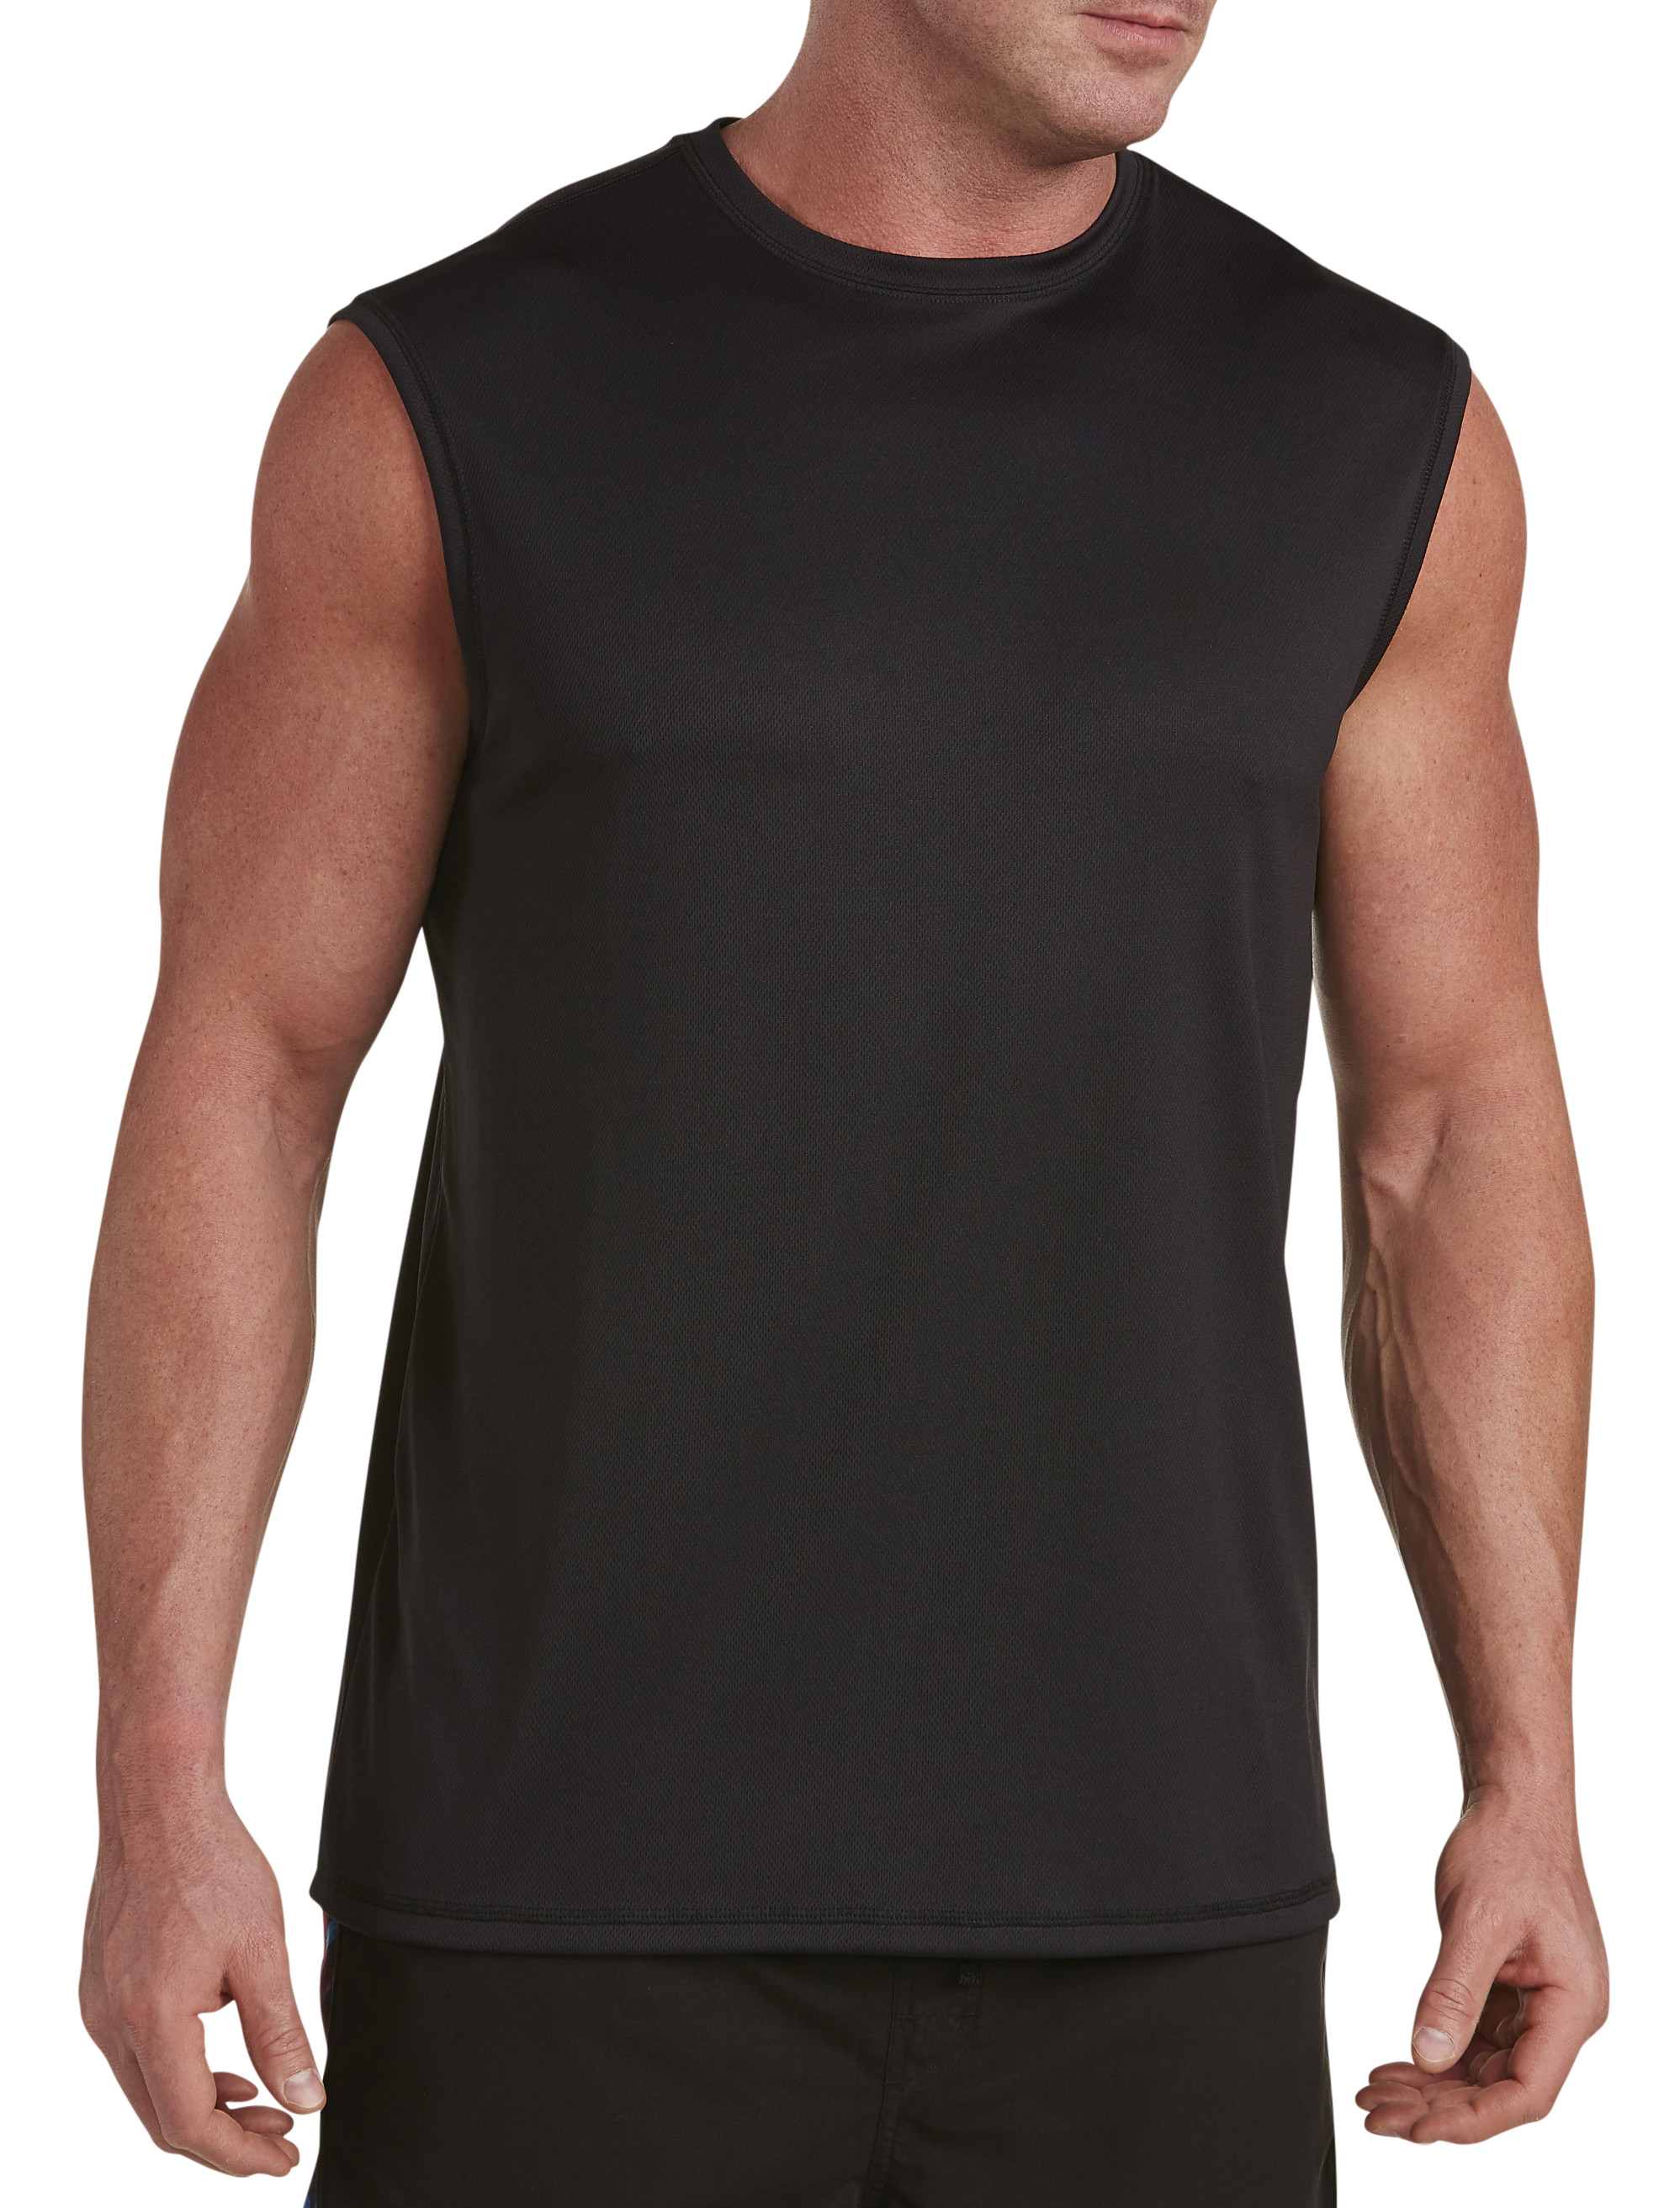 Harbor Bay by DXL Big and Tall Shapewear Tank T-Shirt, Black 1XL